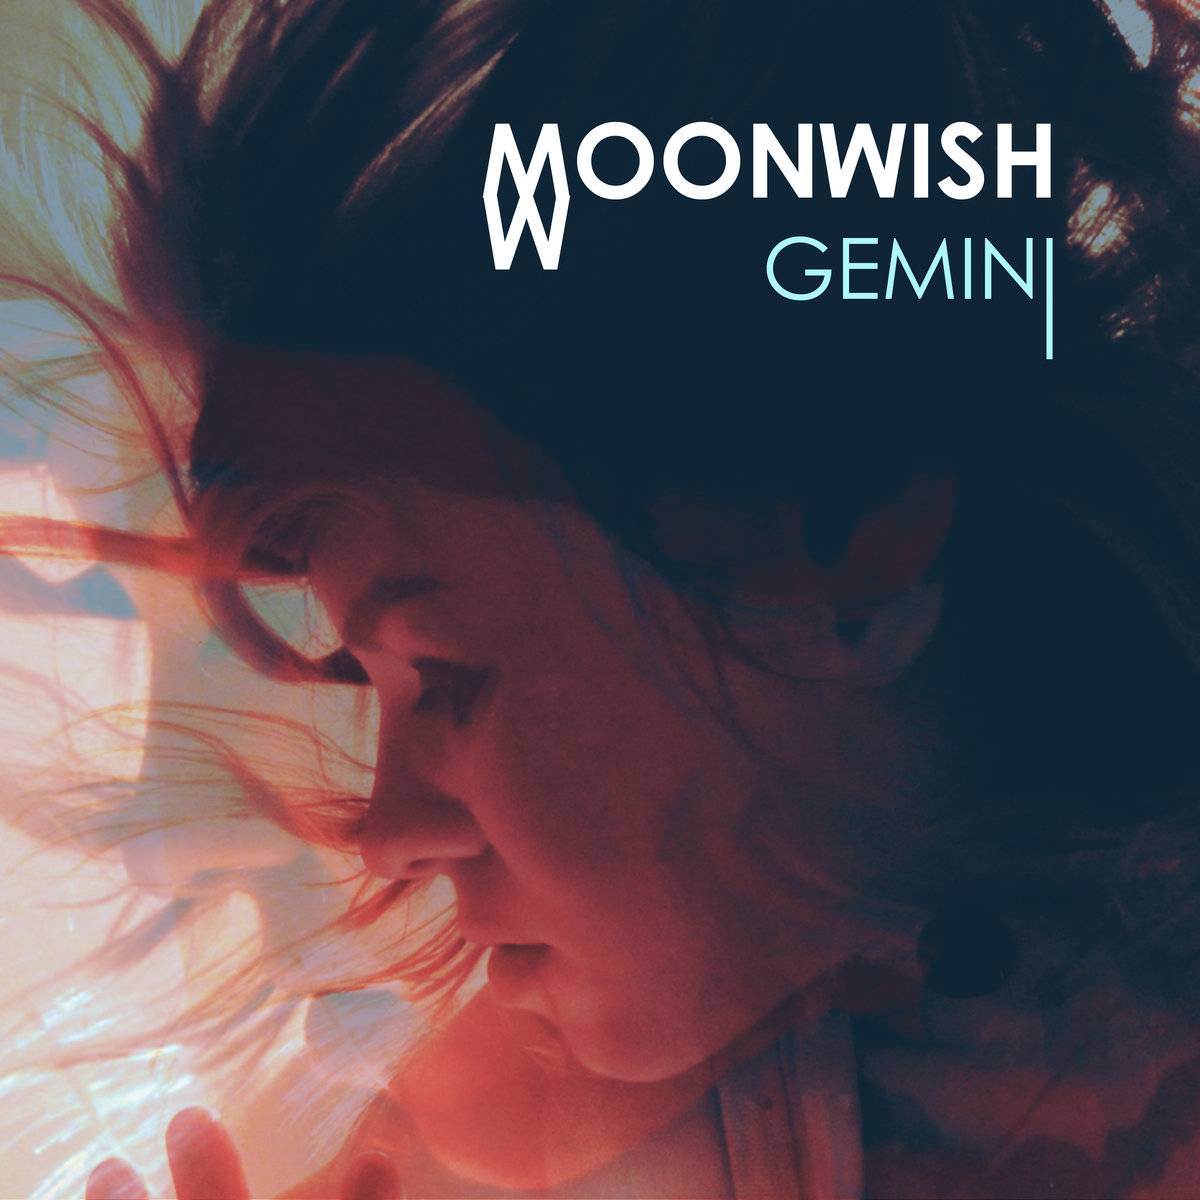 Moonwish – “Gemini” (Video)